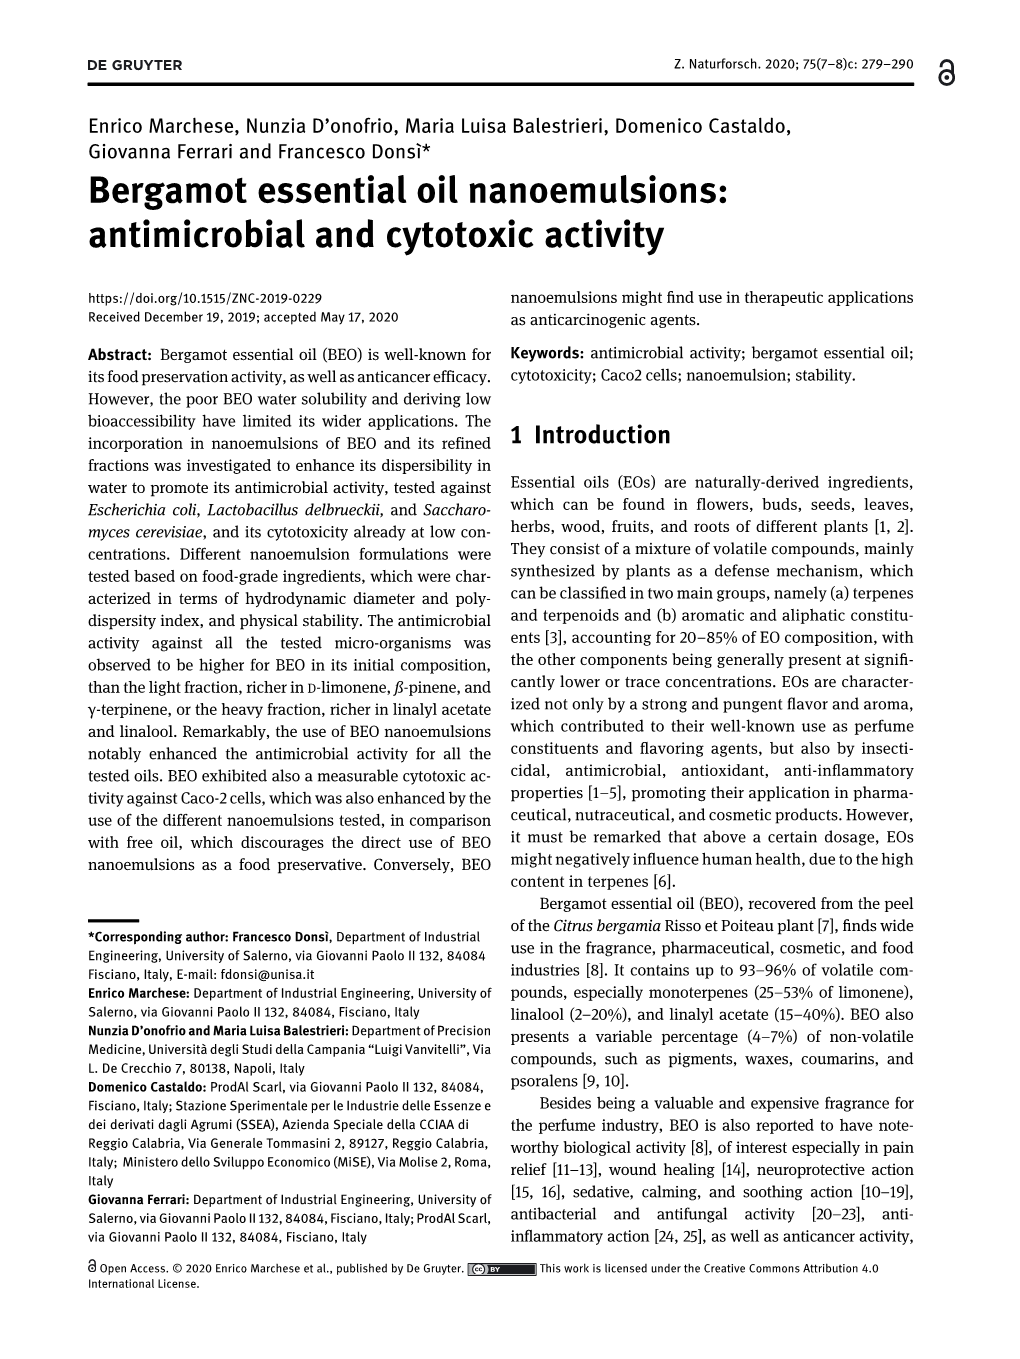 Bergamot Essential Oil Nanoemulsions: Antimicrobial and Cytotoxic Activity